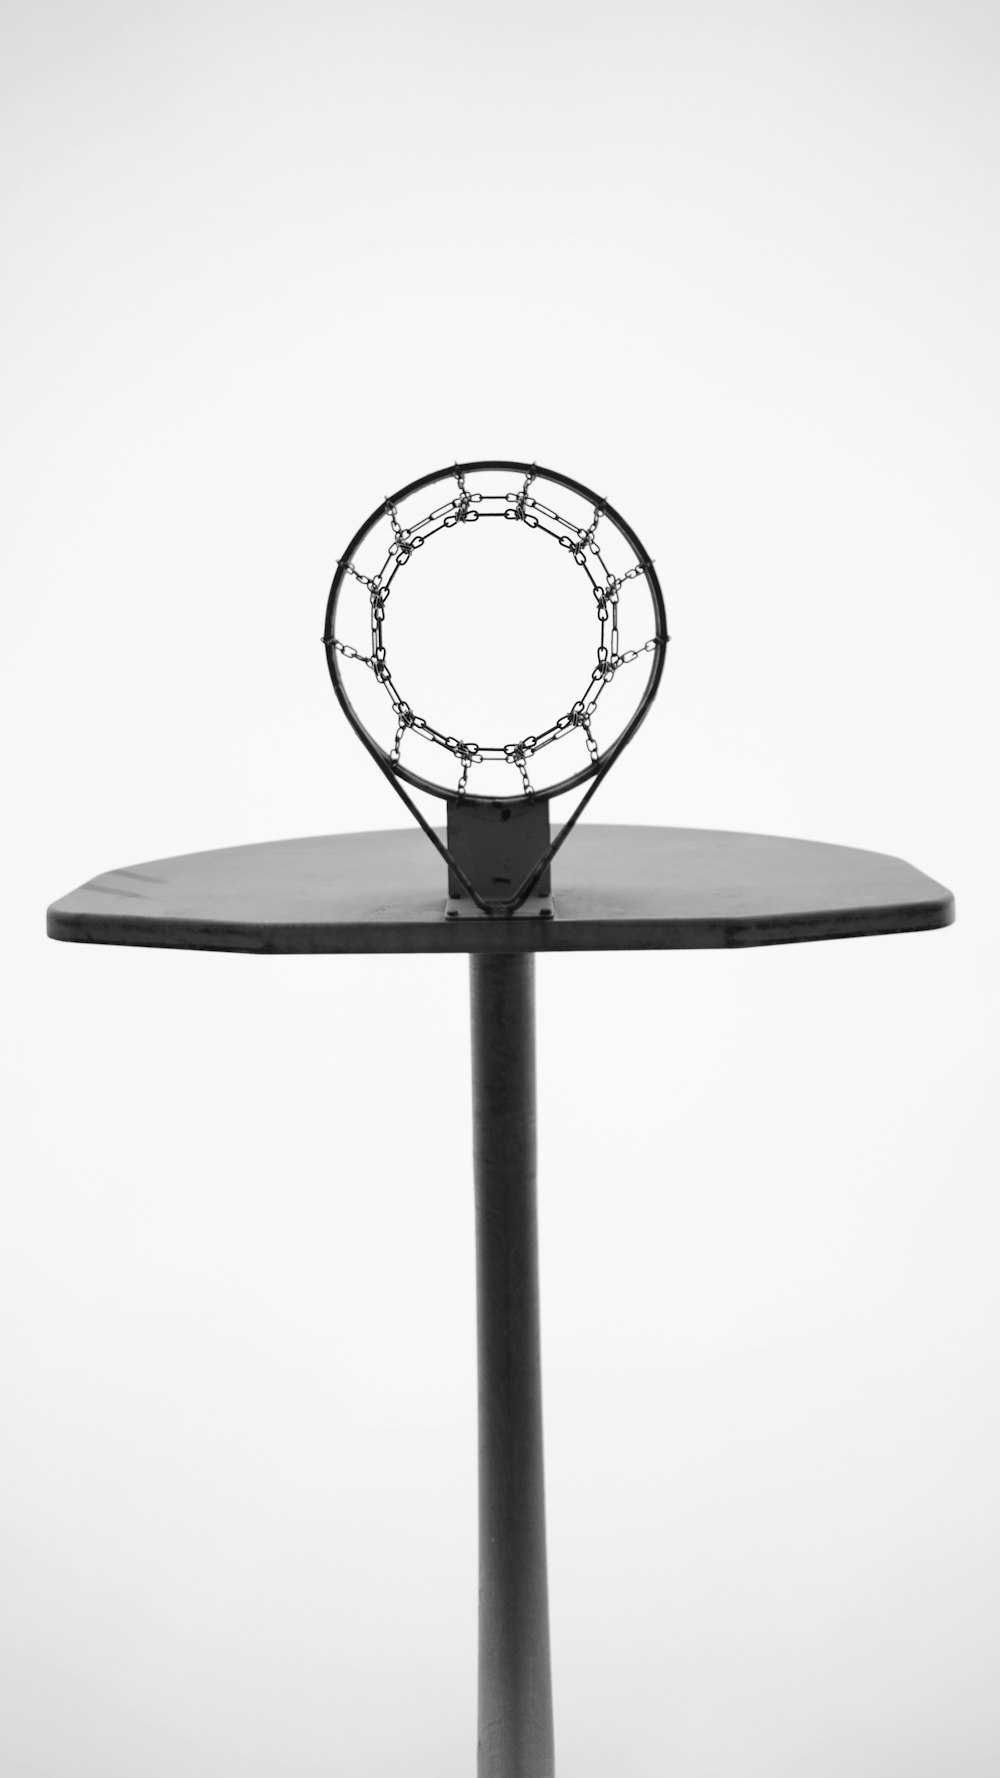 a basketball hoop with a net